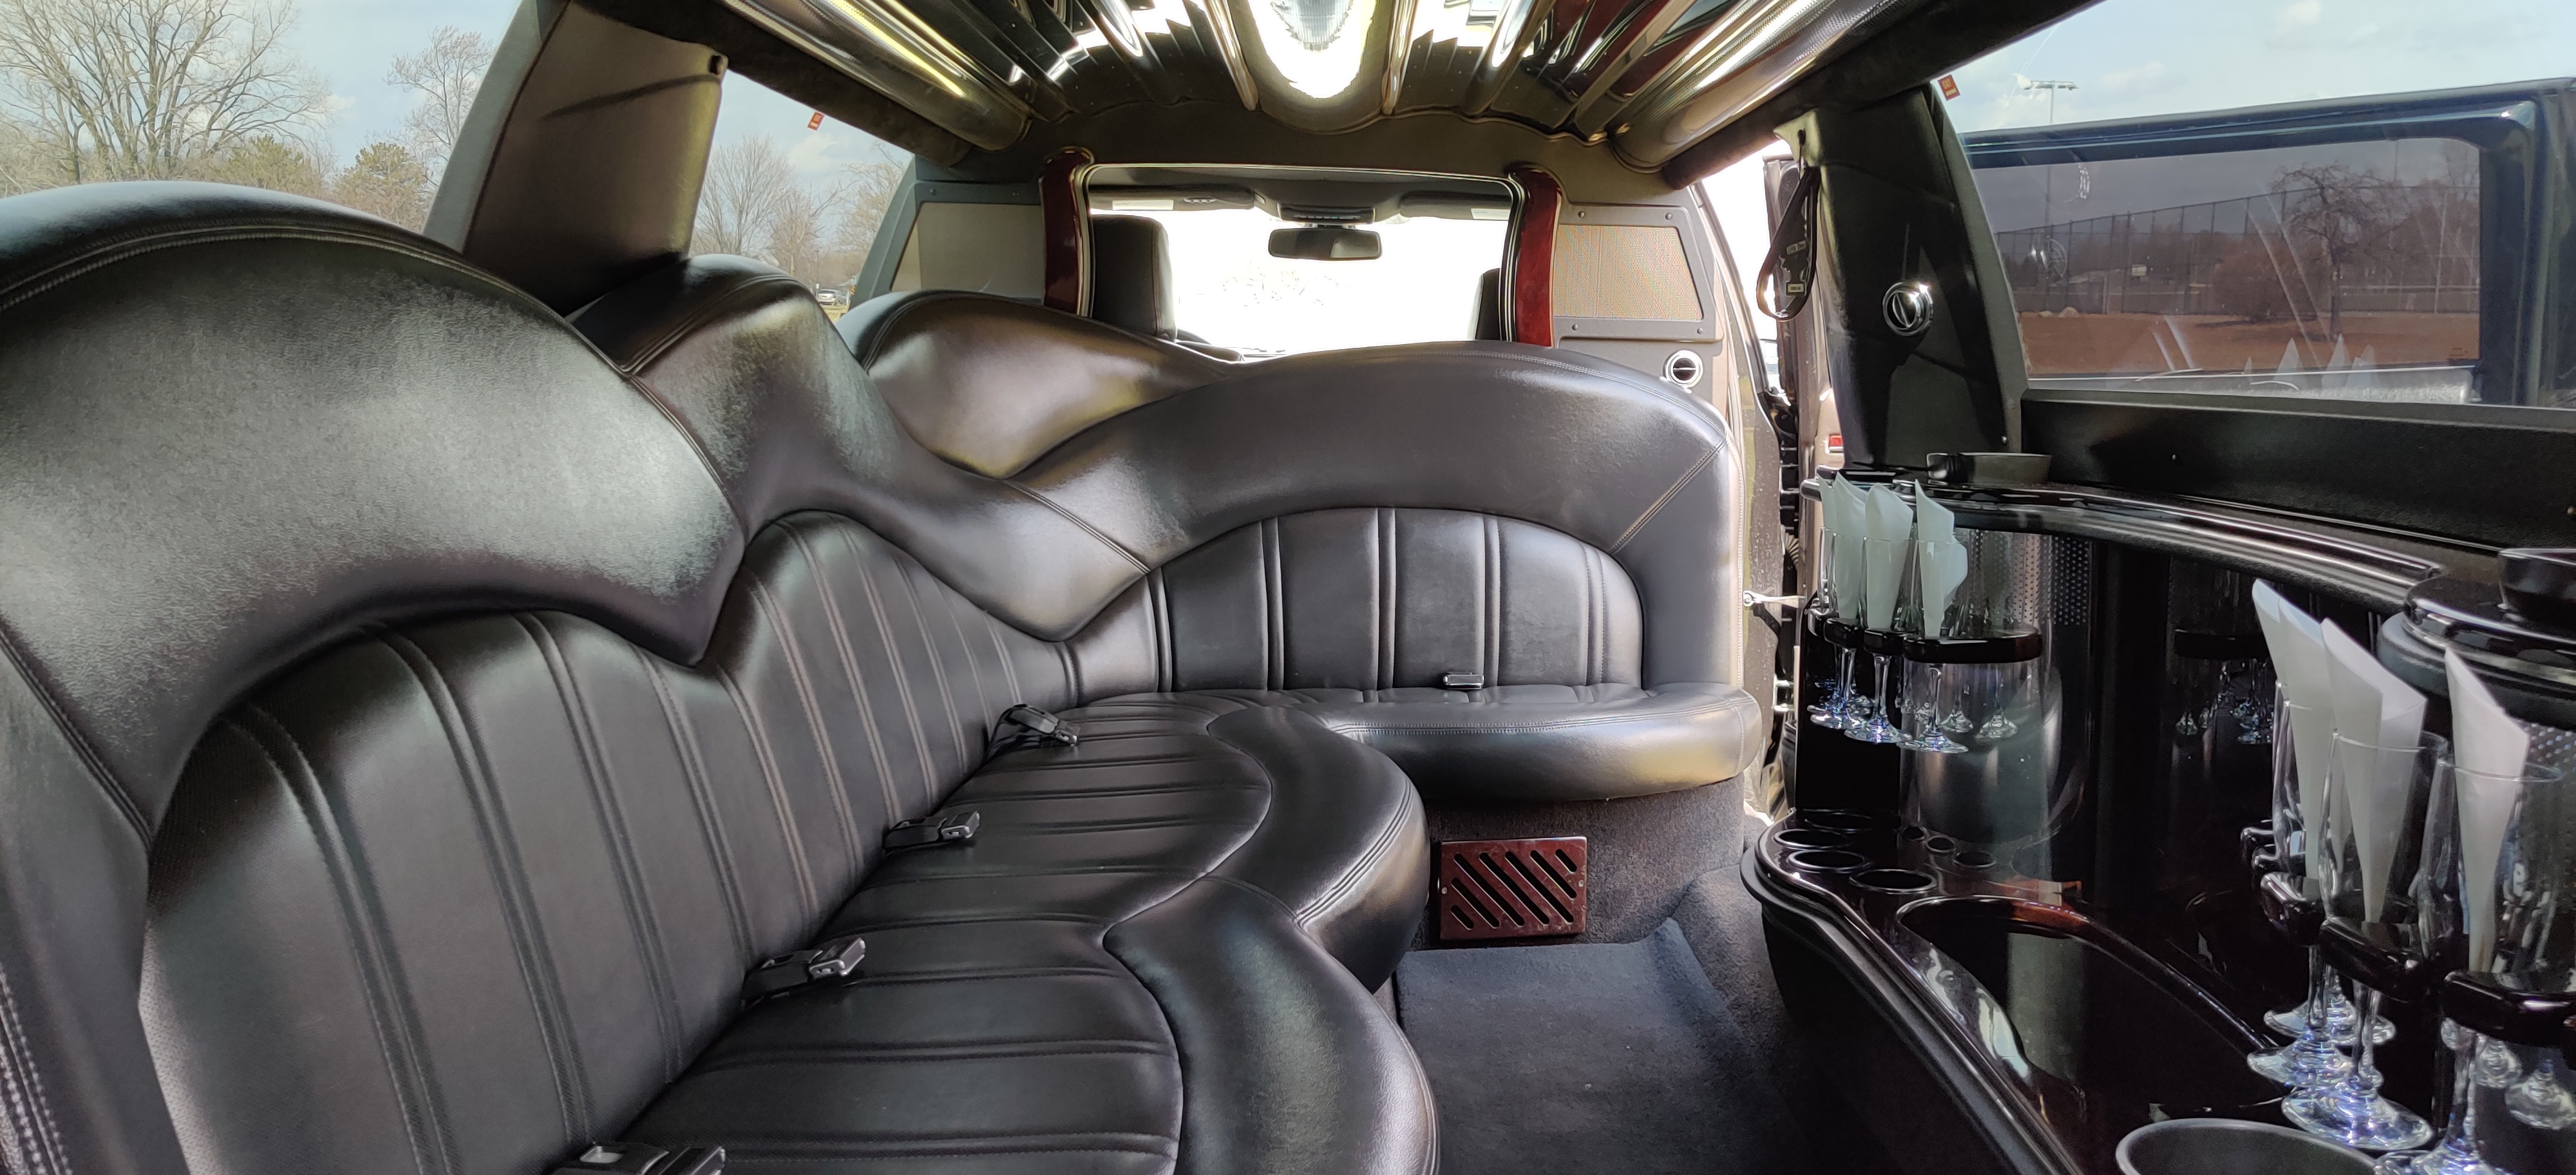 9 Passenger Lincoln MKT Interior 1